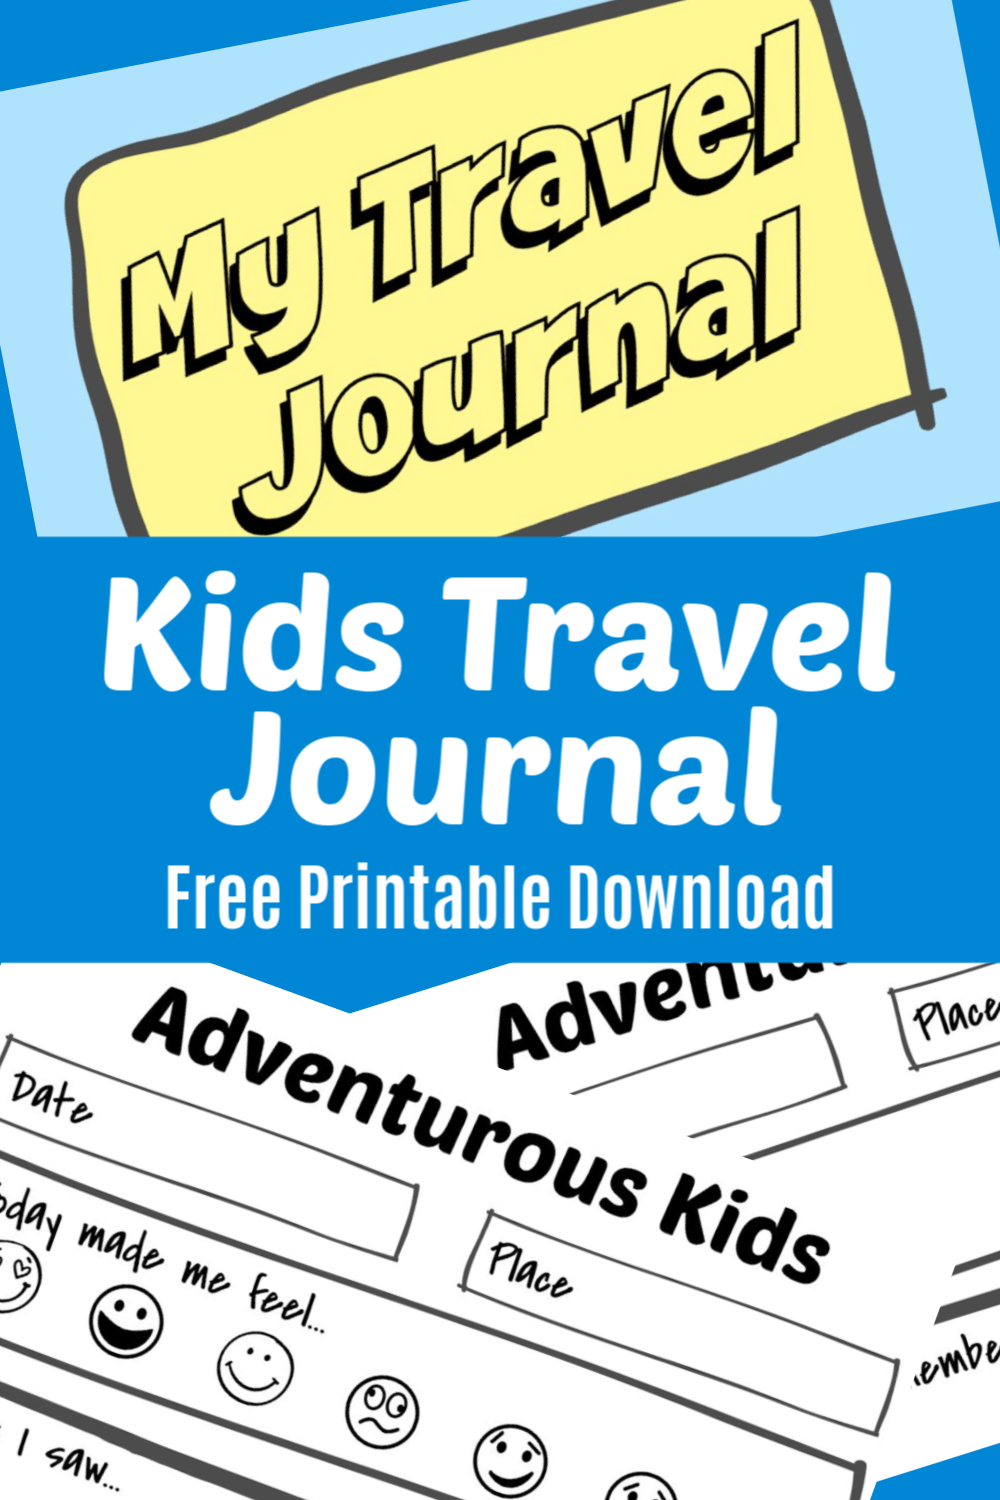 Kids Travel Journal - Free Printable Download